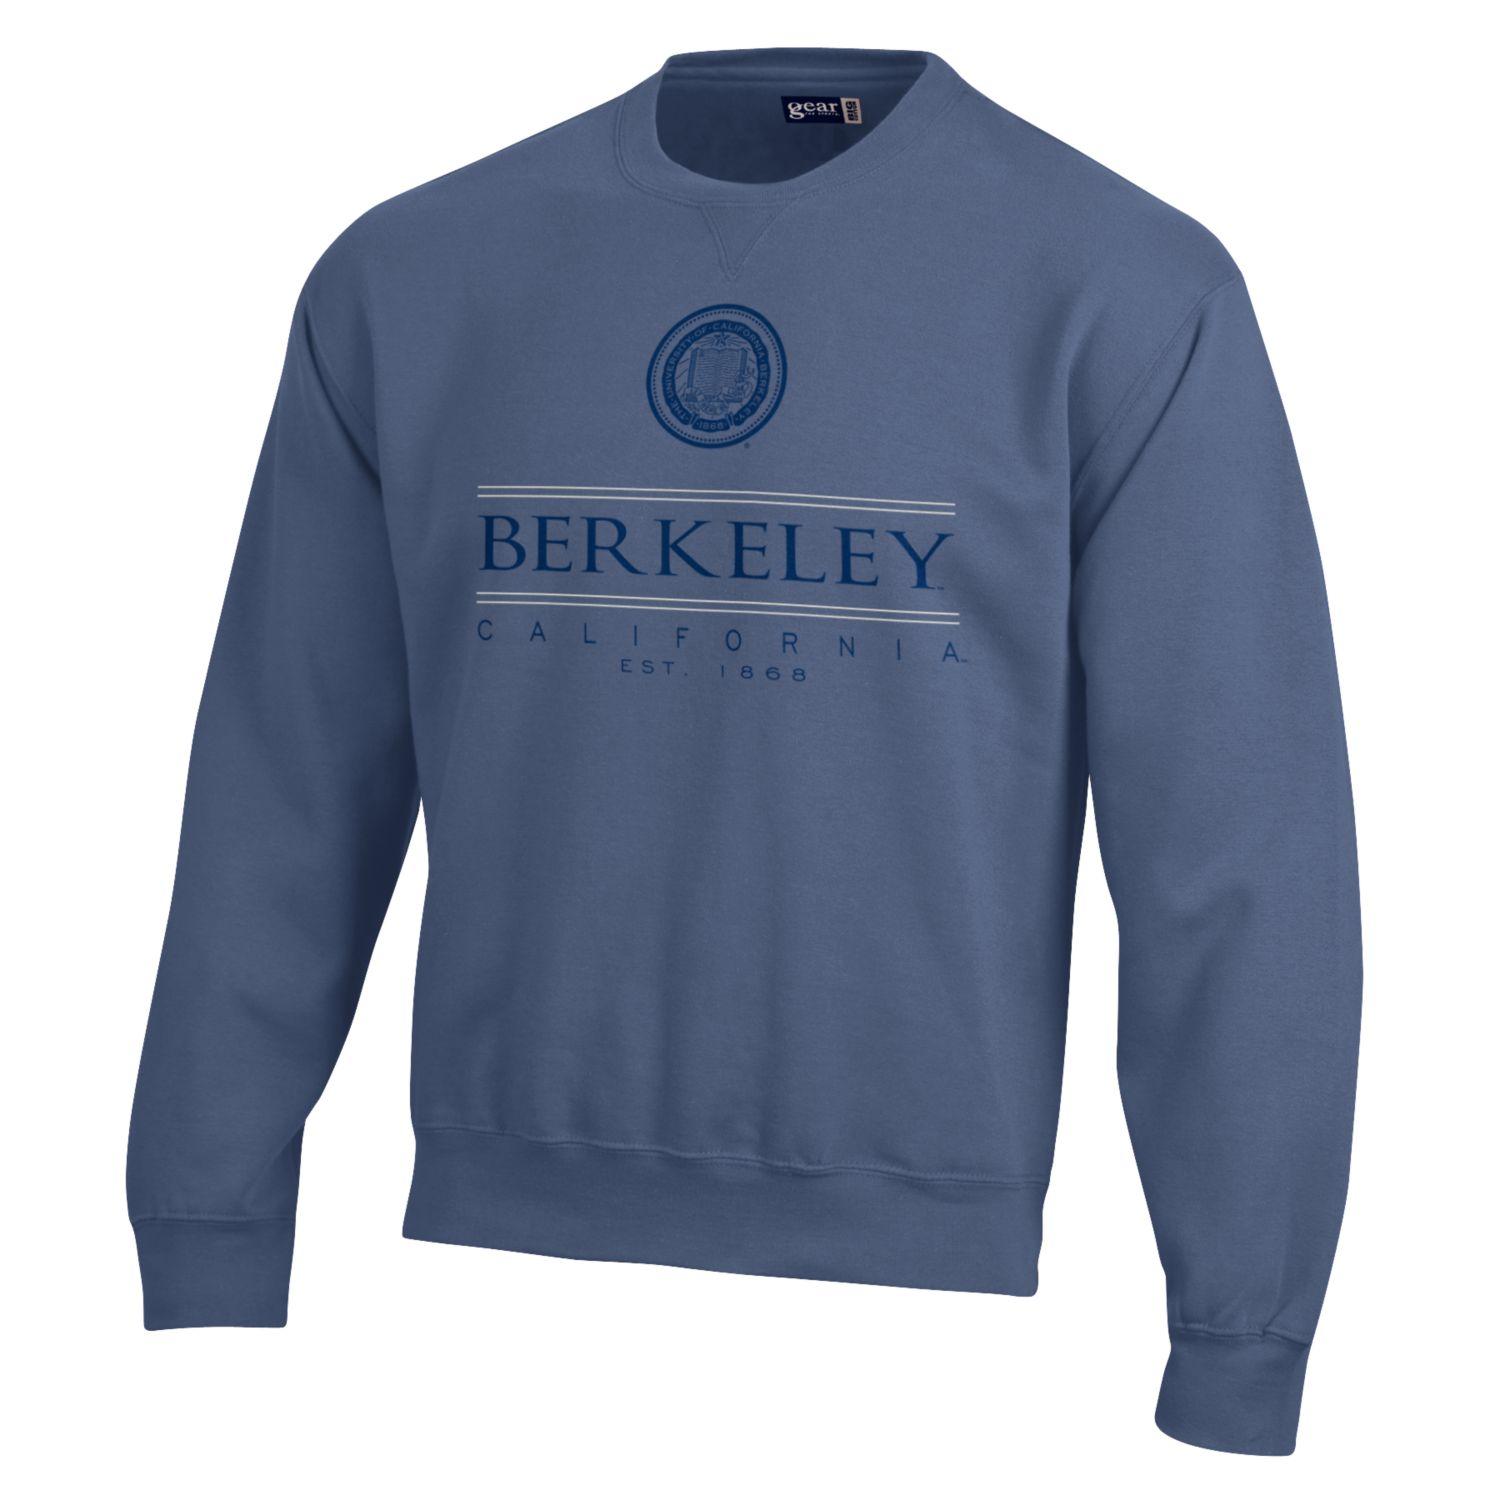 U.C. Berkeley Cal Gear For Sports cotton rich crew-sweatshirt with school seal over Berkeley-Blue-Shop College Wear